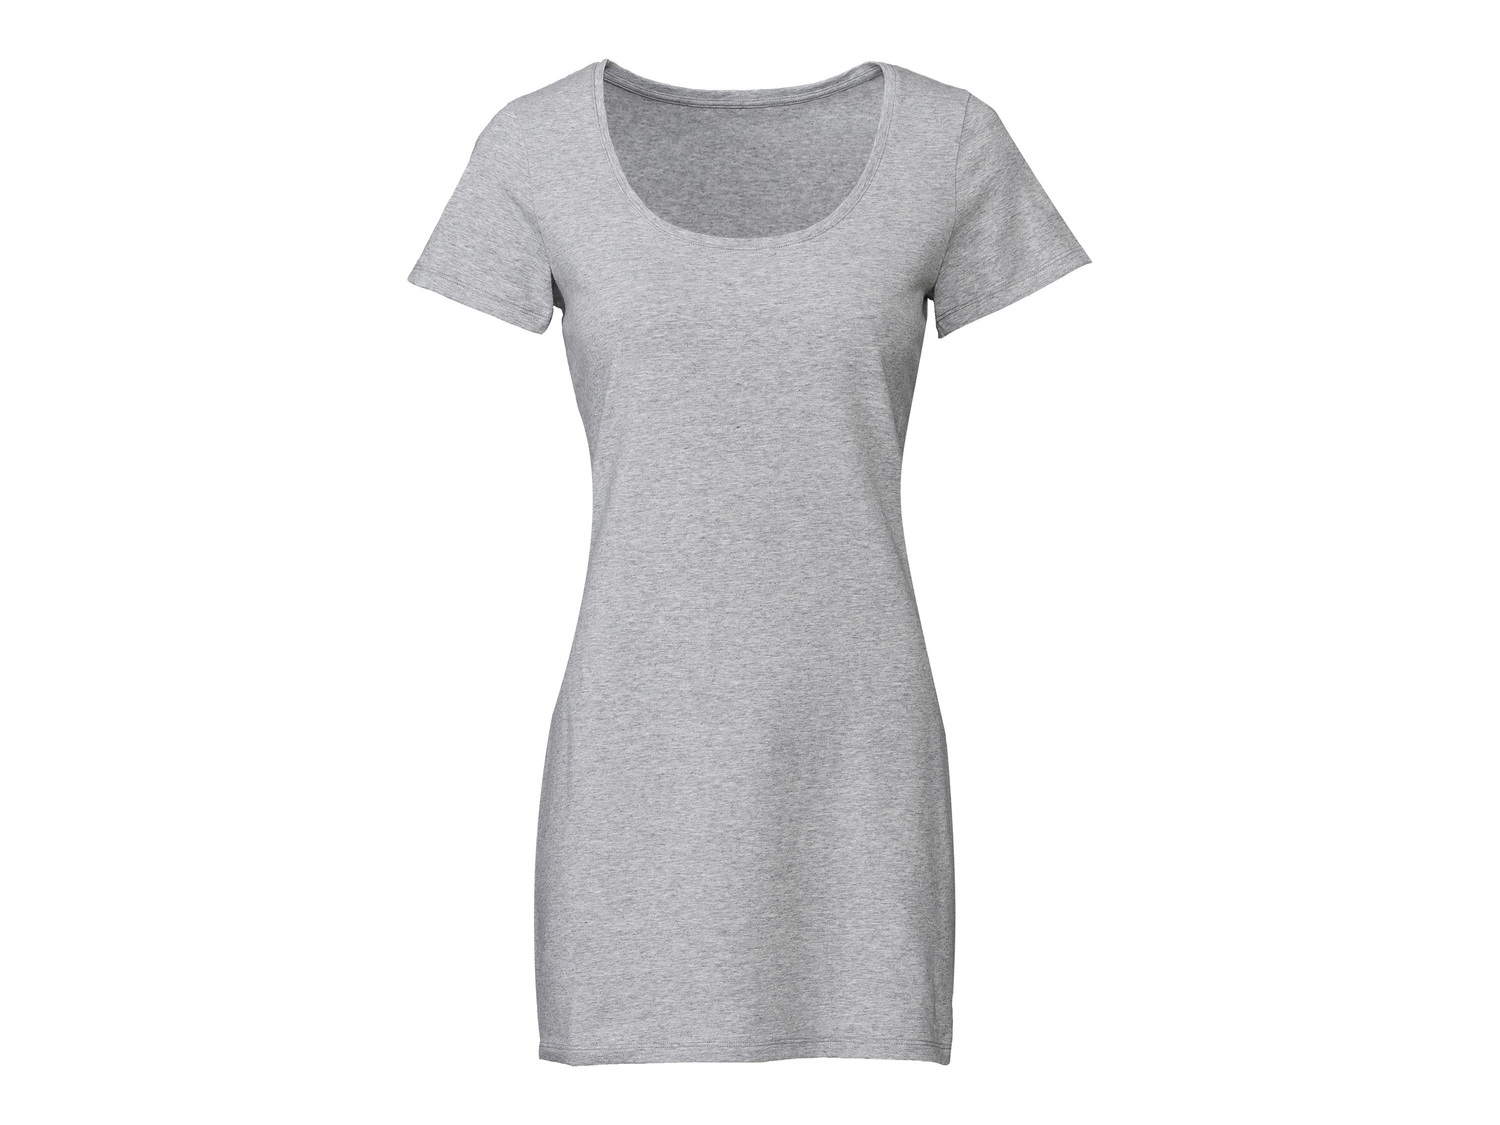 T-shirt lunga da donna Esmara, prezzo 4.99 &#8364;  

- Oeko tex NEW